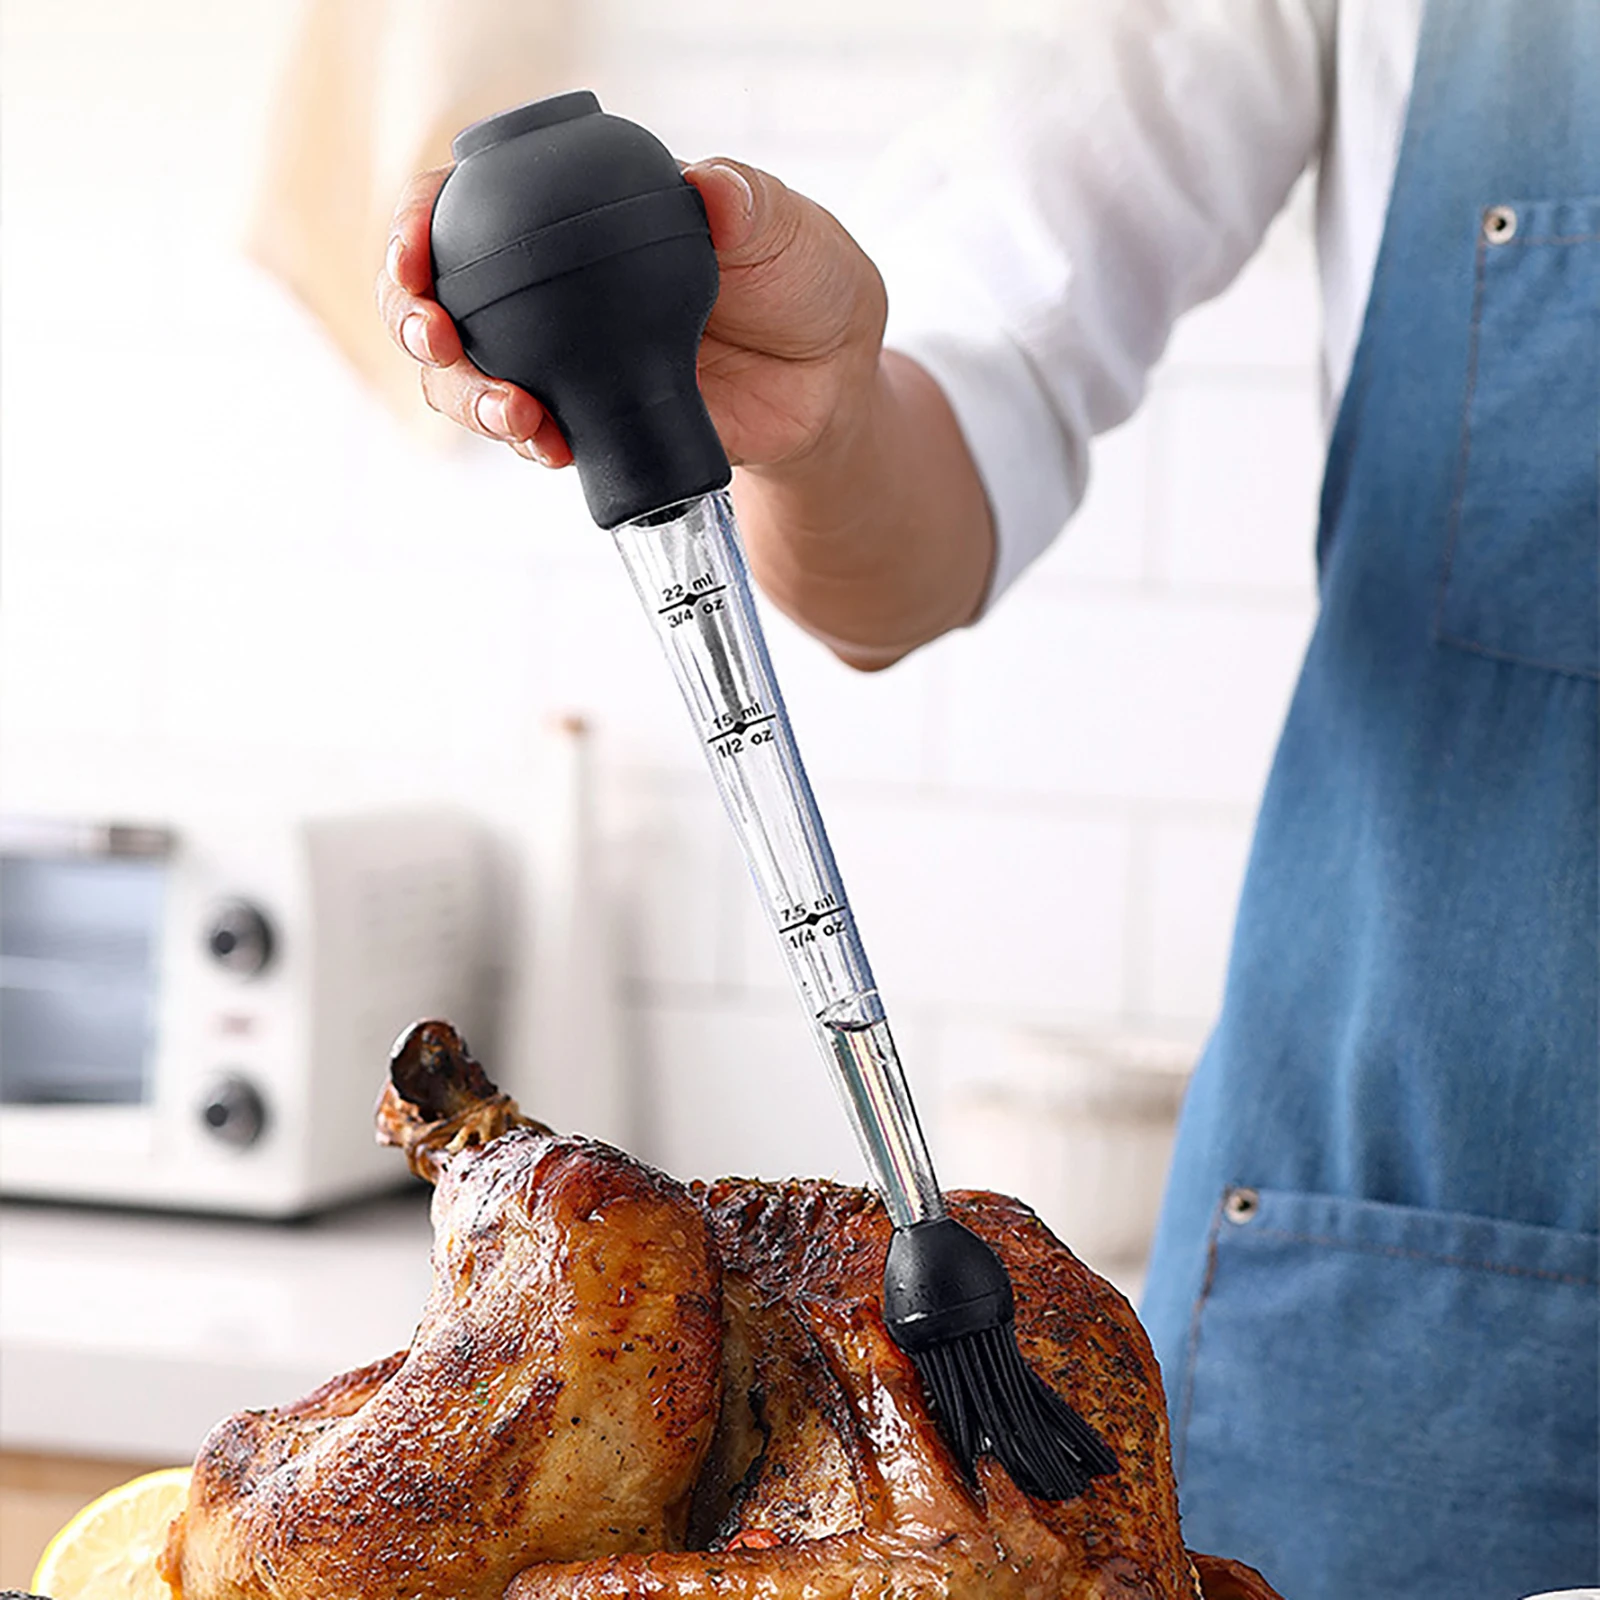 https://ae01.alicdn.com/kf/Ha9d31abfd38a4365a41c73d05548c853d/Turkey-Baster-Oil-Dropper-Cooking-Turkey-Chicken-Oil-Dropper-BBQ-Food-Flavour-Baster-Syringe-Tube-Pump.jpg